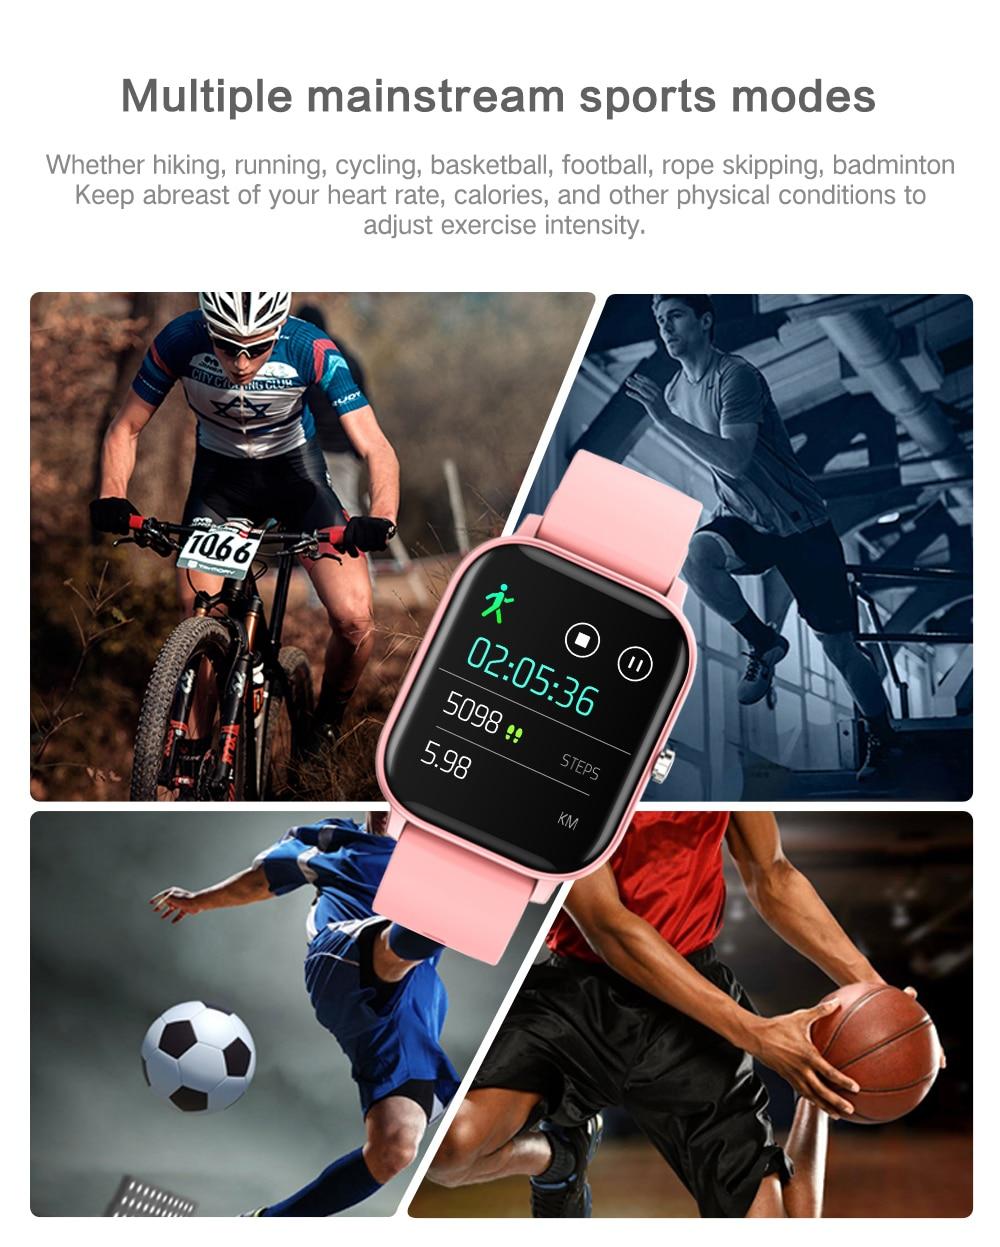 ZKCREATION 1.4 inch Screen Fit Bit P8 Smart Watches Wristband Fitness Bracelet Men Smartwatch Blood Pressure Tracker for Women